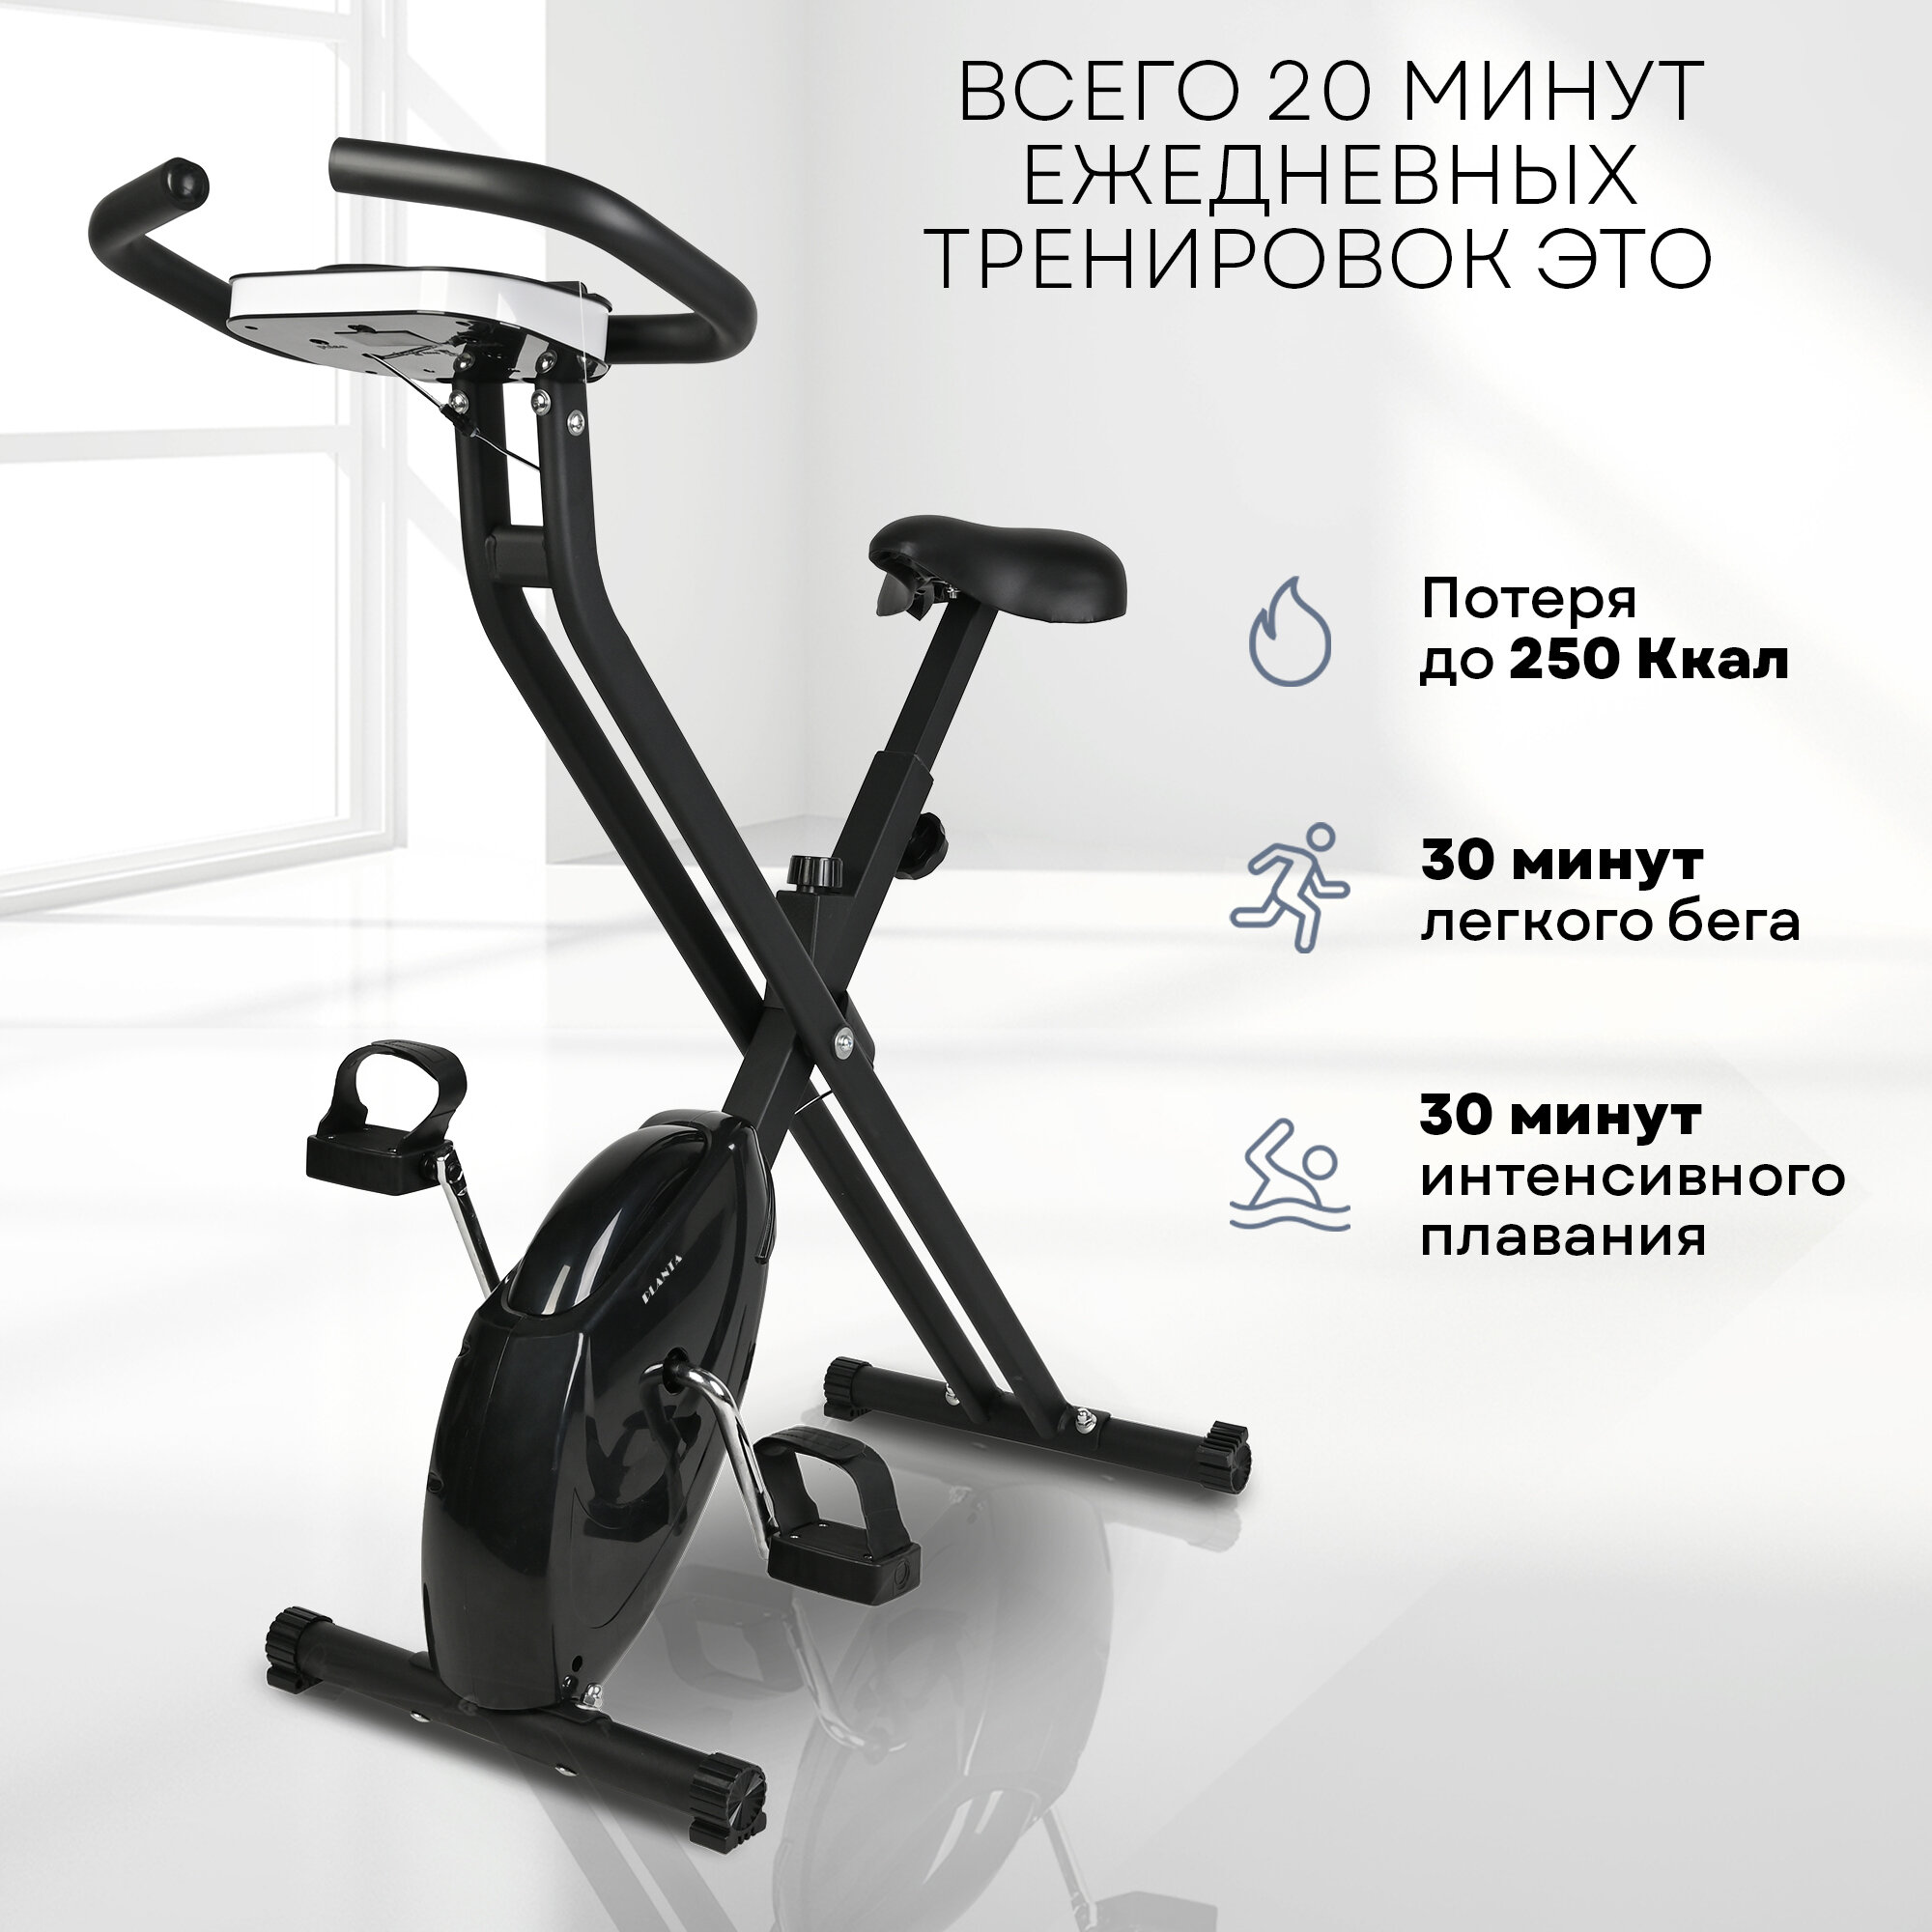 PLANTA Складной велотренажер для дома FD-BIKE-005, тренажер для похудения, мини велотренажер